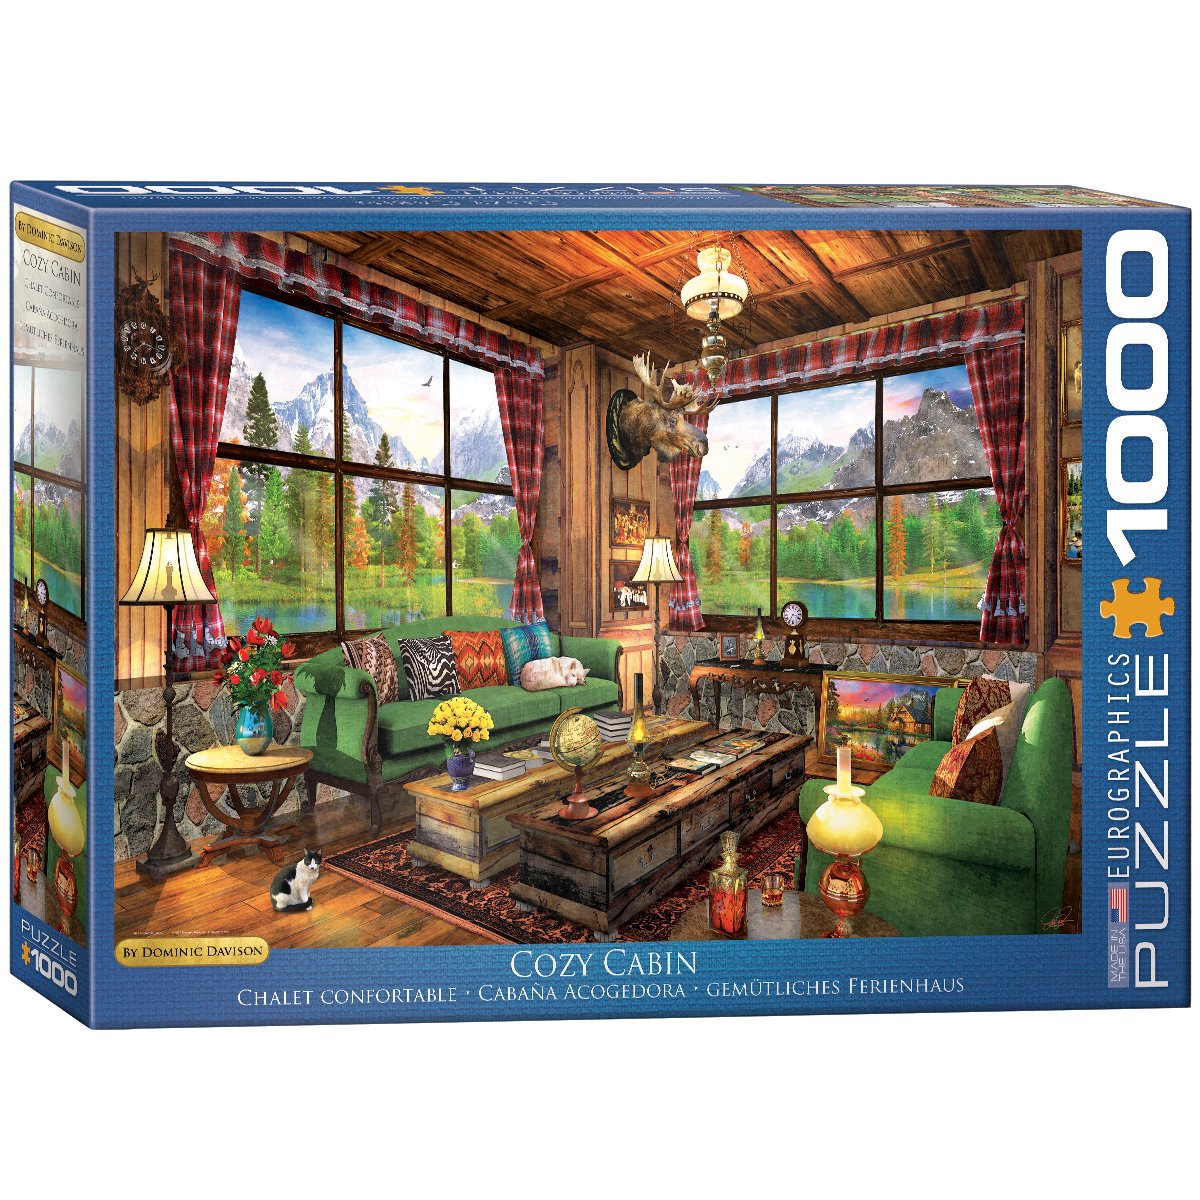 Puzzle Dominic Davison Cozy Cabin Eurographics 6000 5377 1000 Pieces